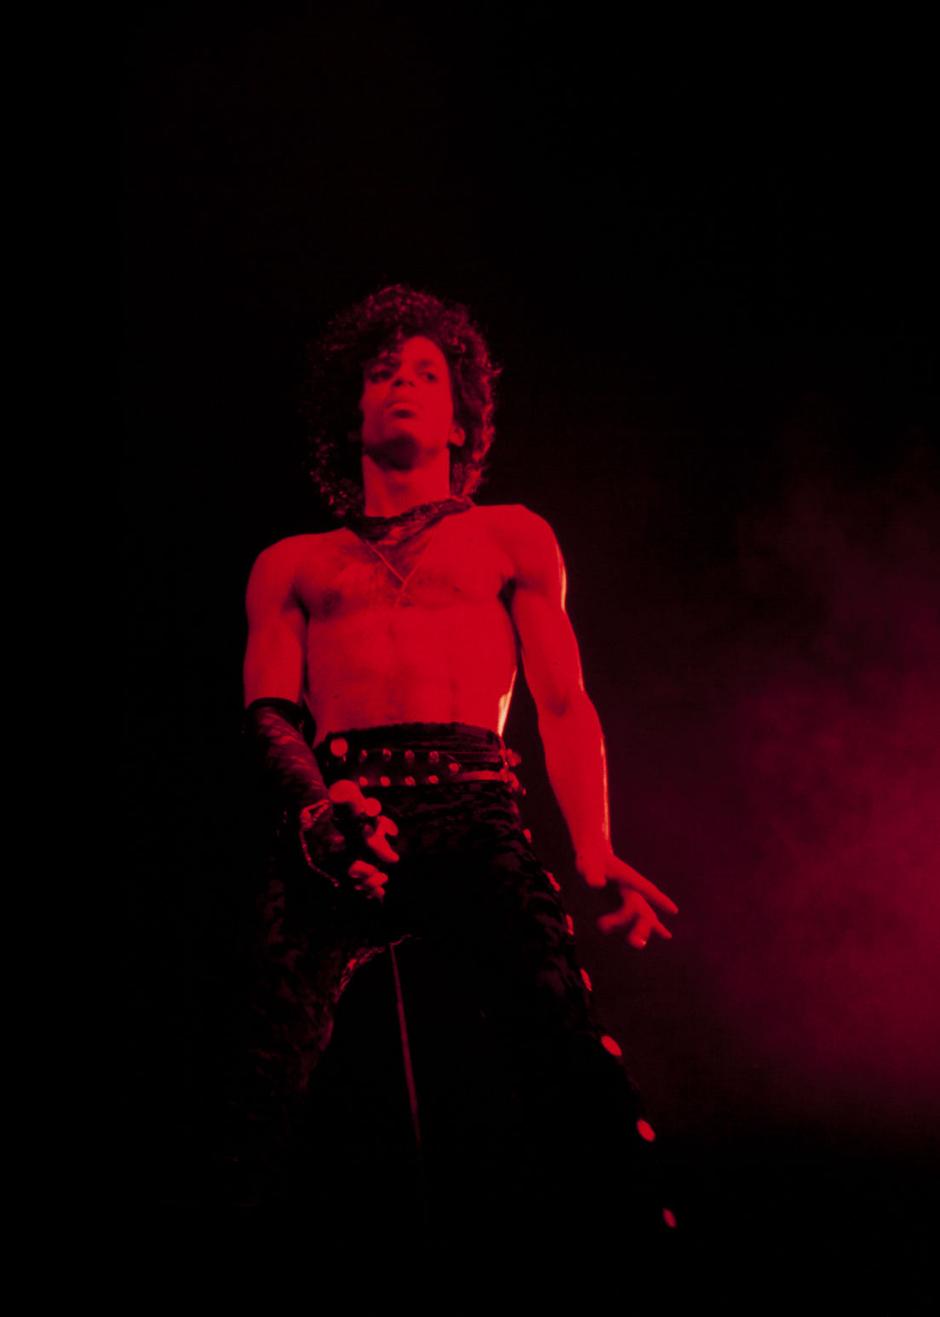 Prince In Concert At Greensboro Coliseum November 15, 1984